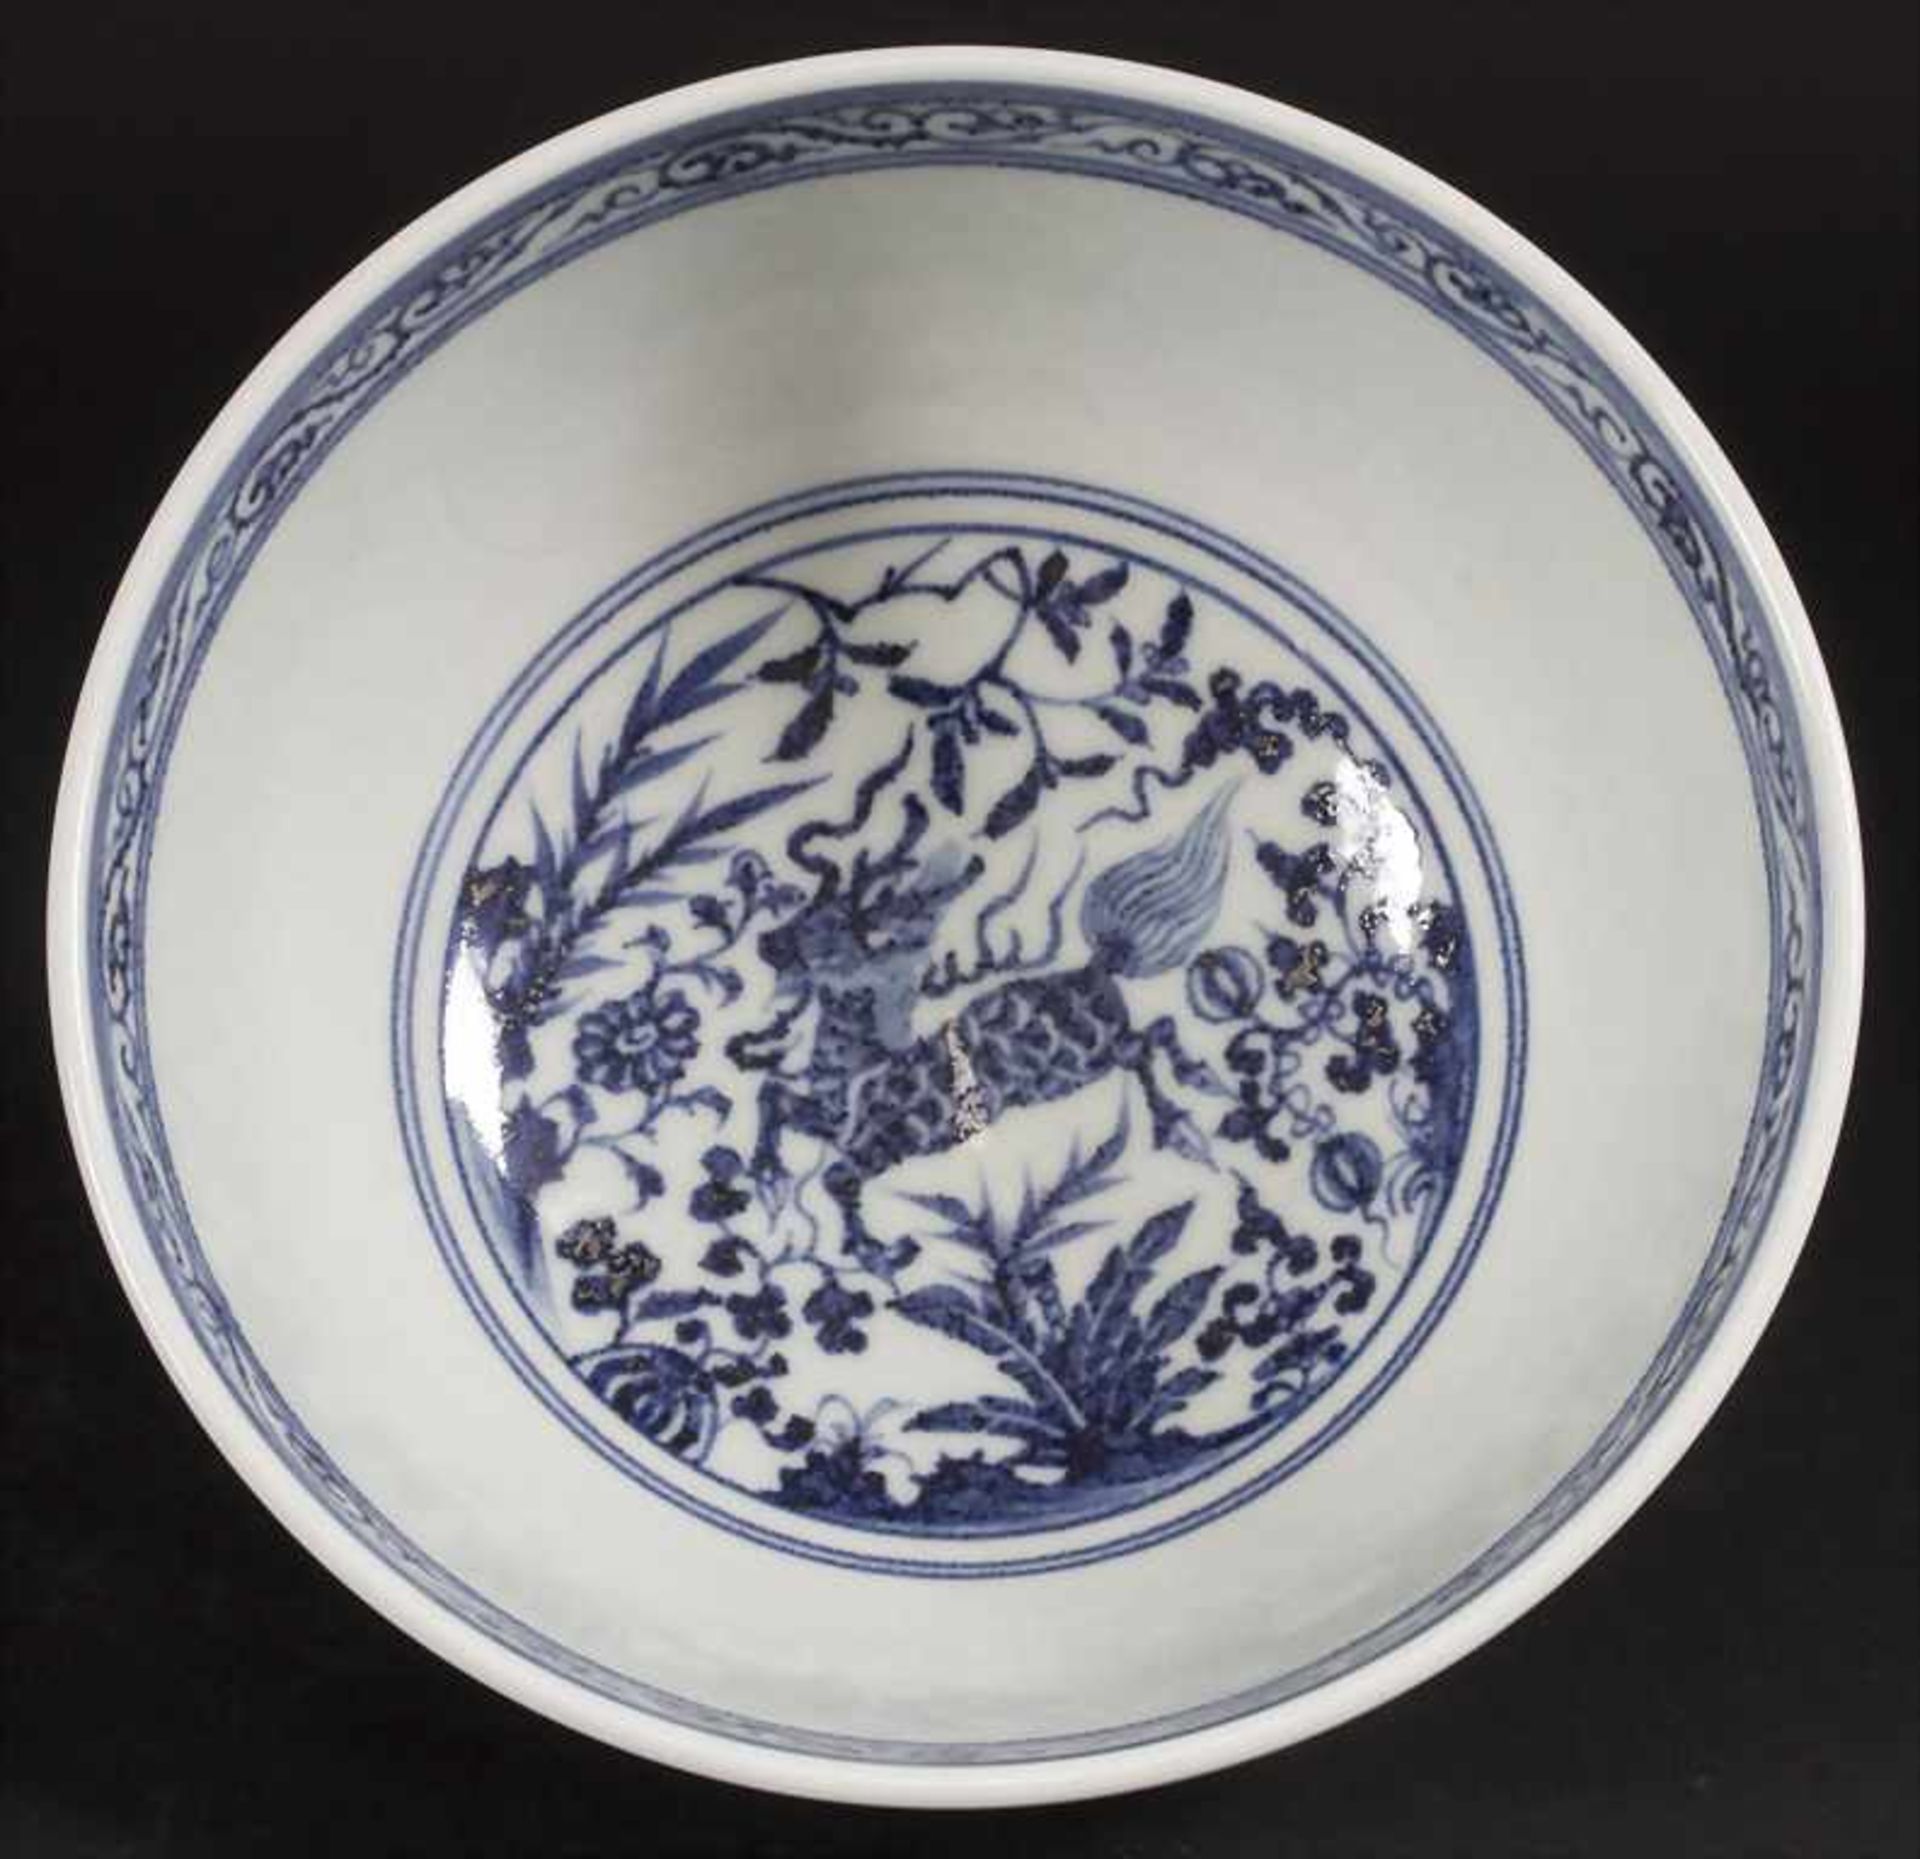 Porzellan-Kumme / A porcelain bowl, China, wohl Qing-Dynastie (1644-1911) - Image 4 of 7